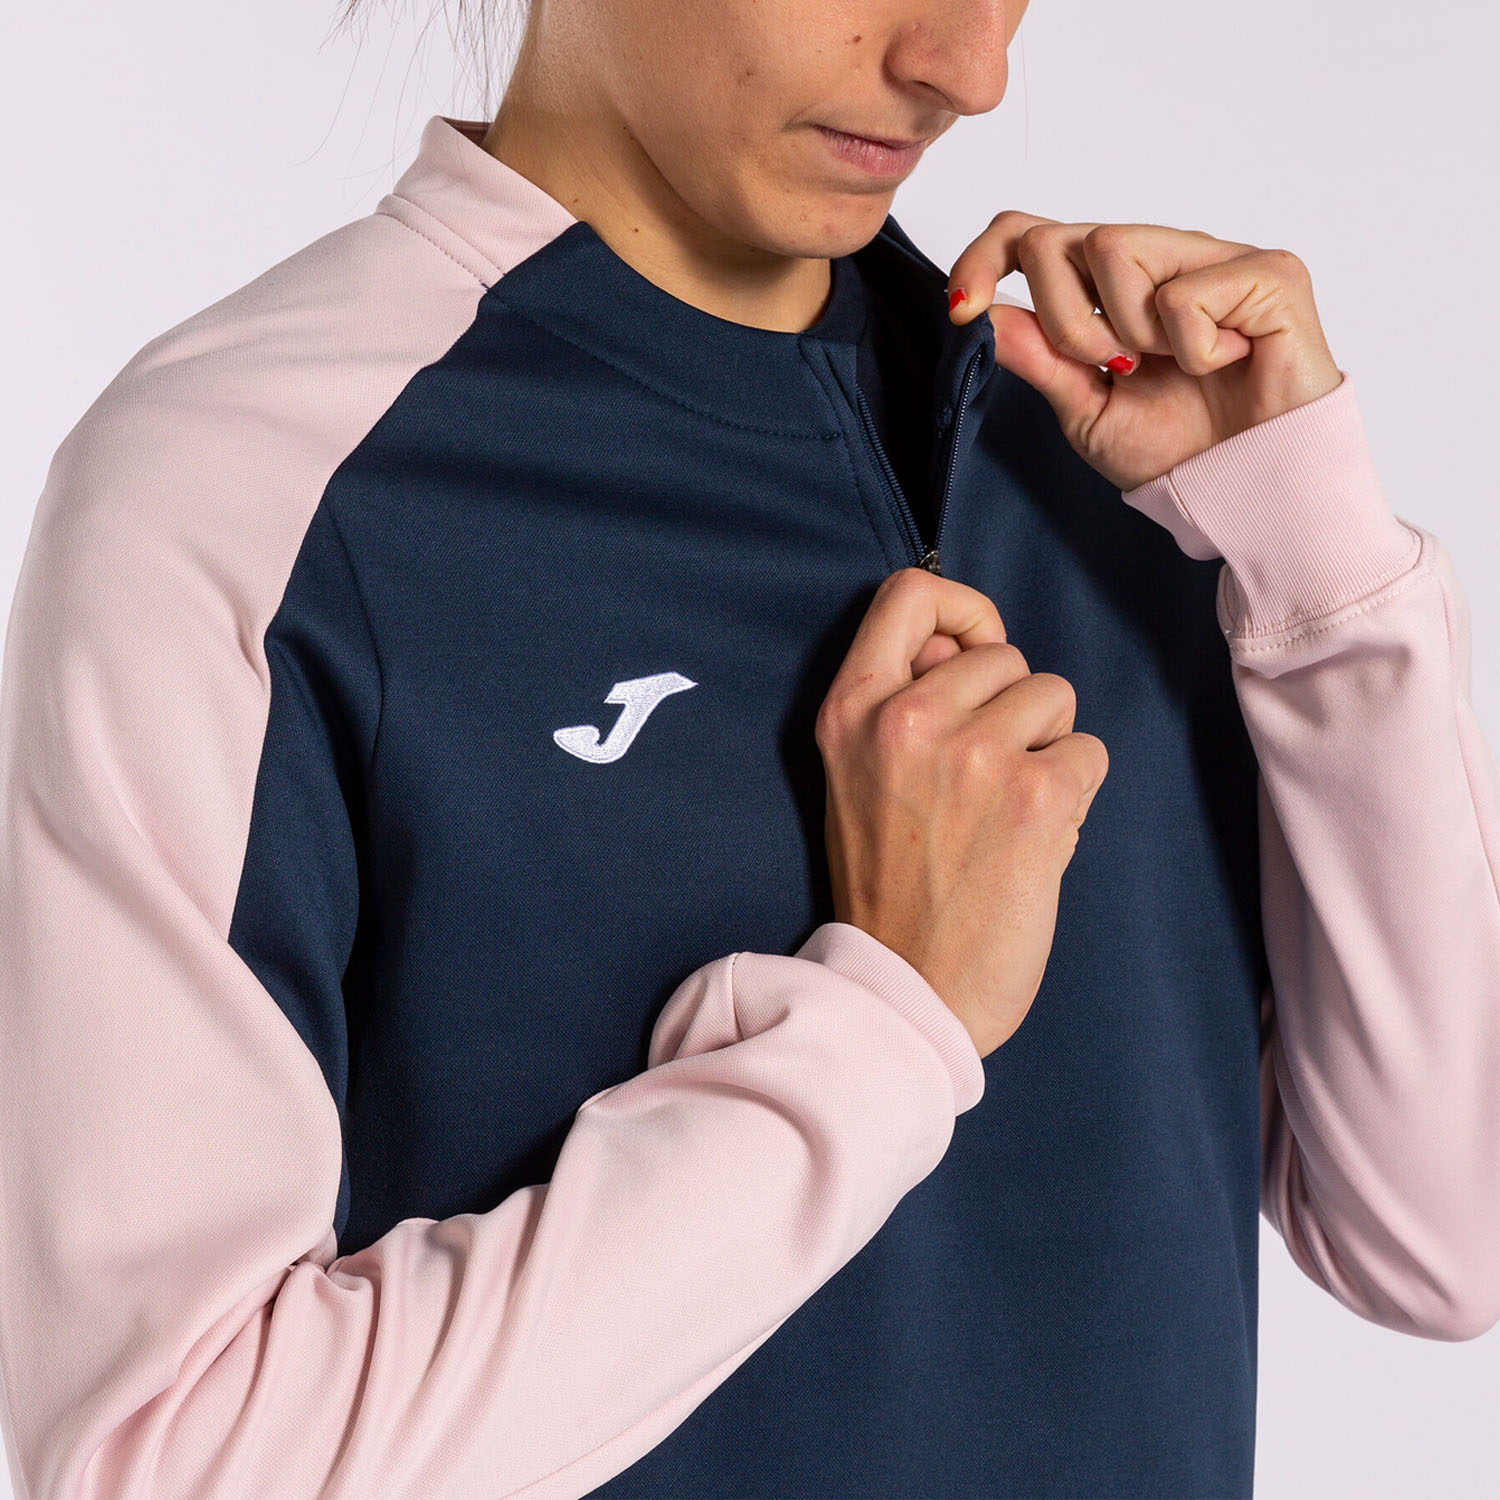 Joma Eco Championship Shirt - Navy/Pink